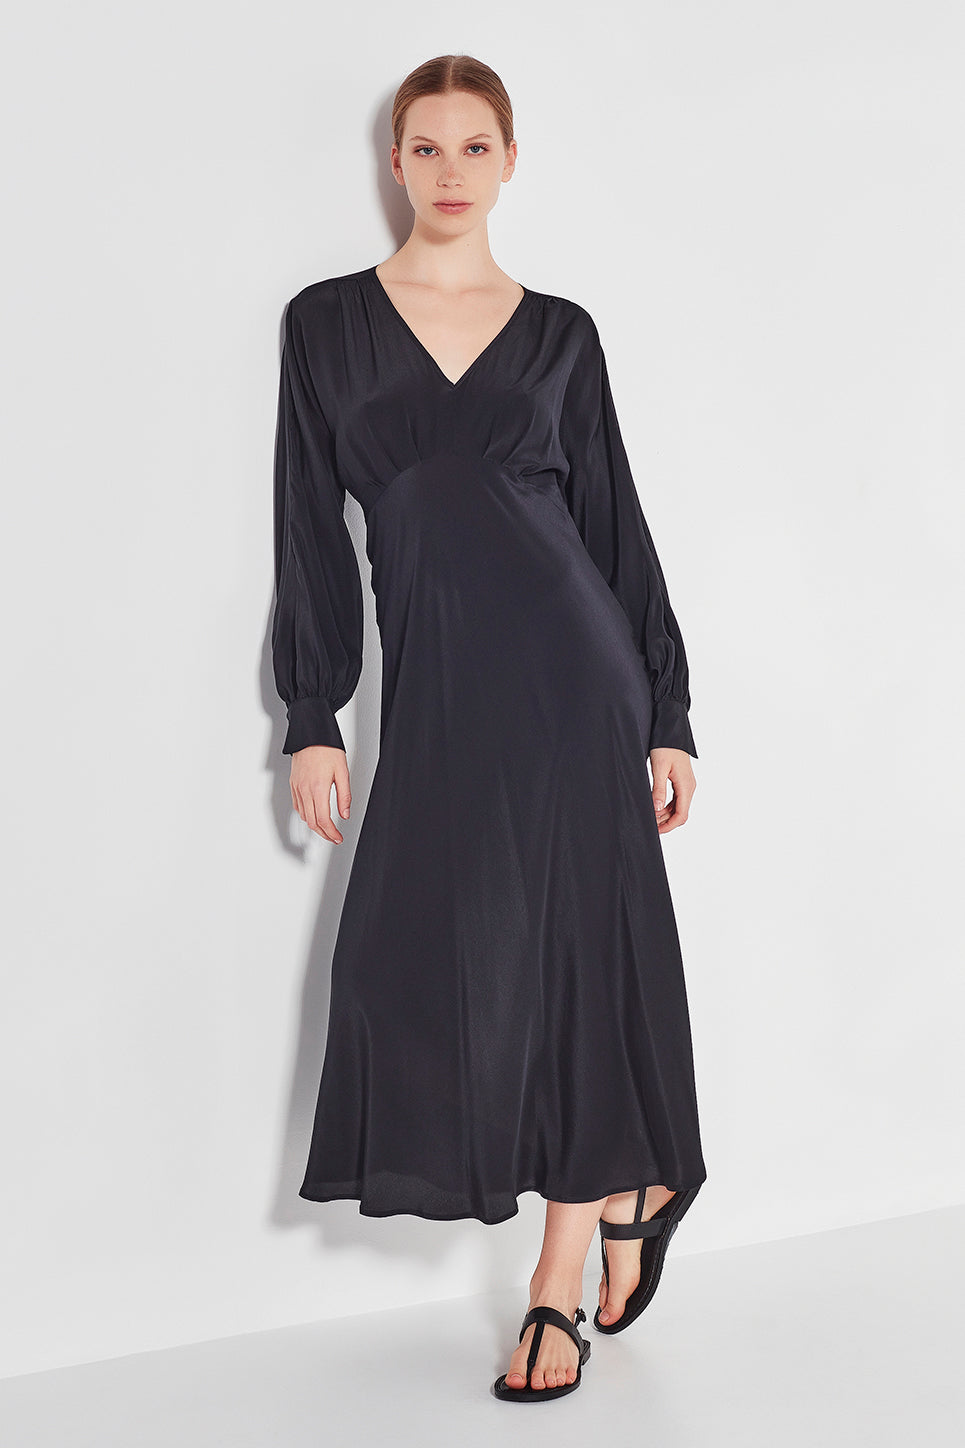 The Vionnet Dress in Black